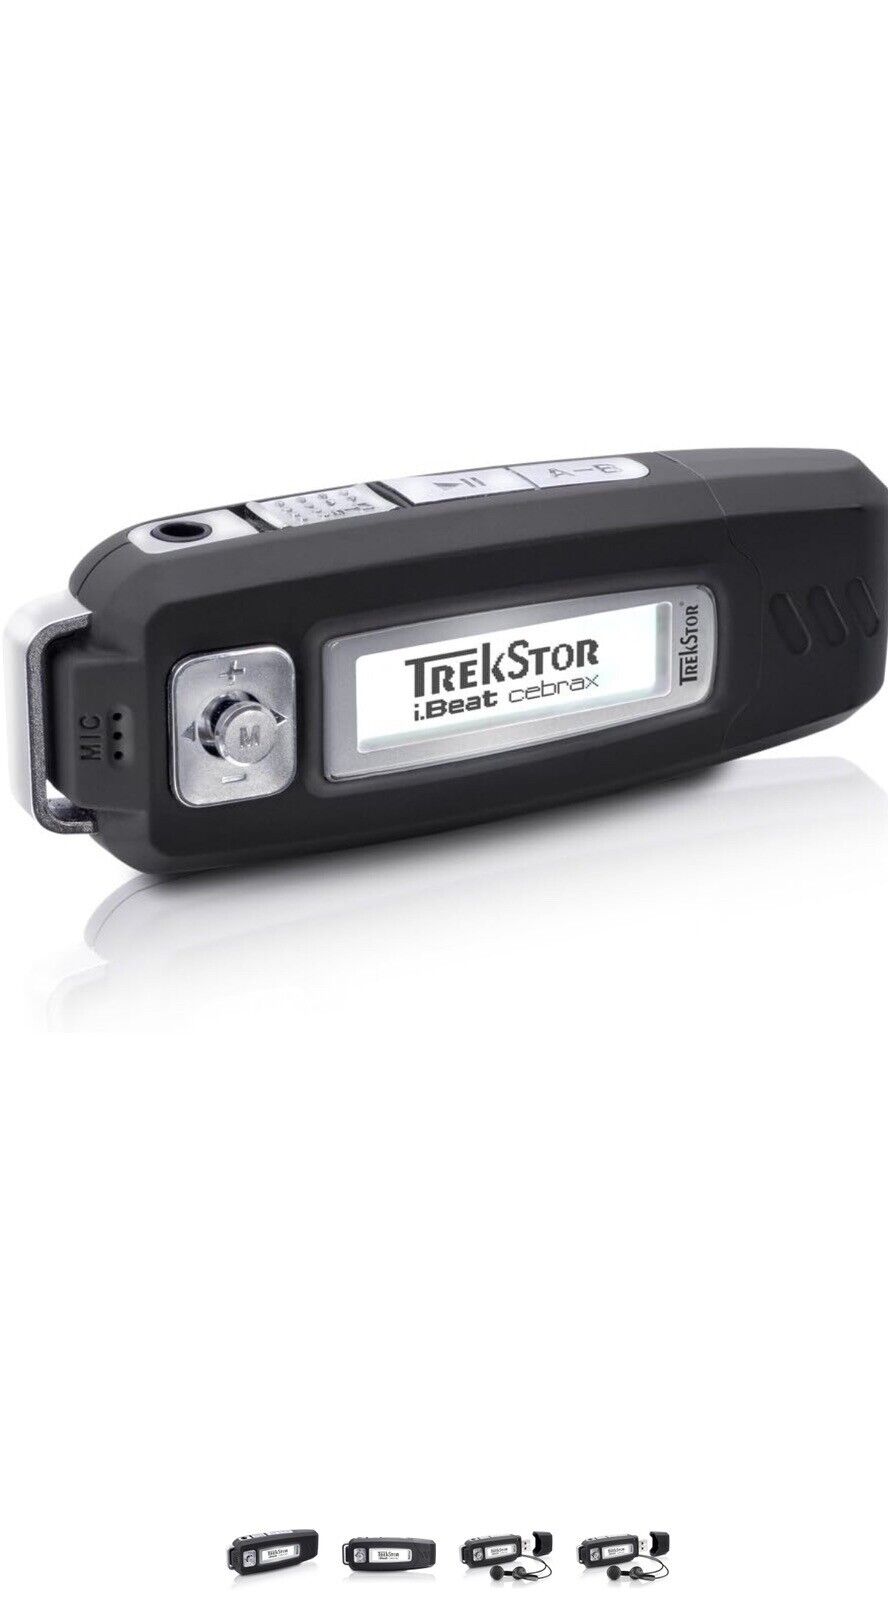 TREKSTOR MP3-Player cebrax 3.0 - 4 GB with earphone Black